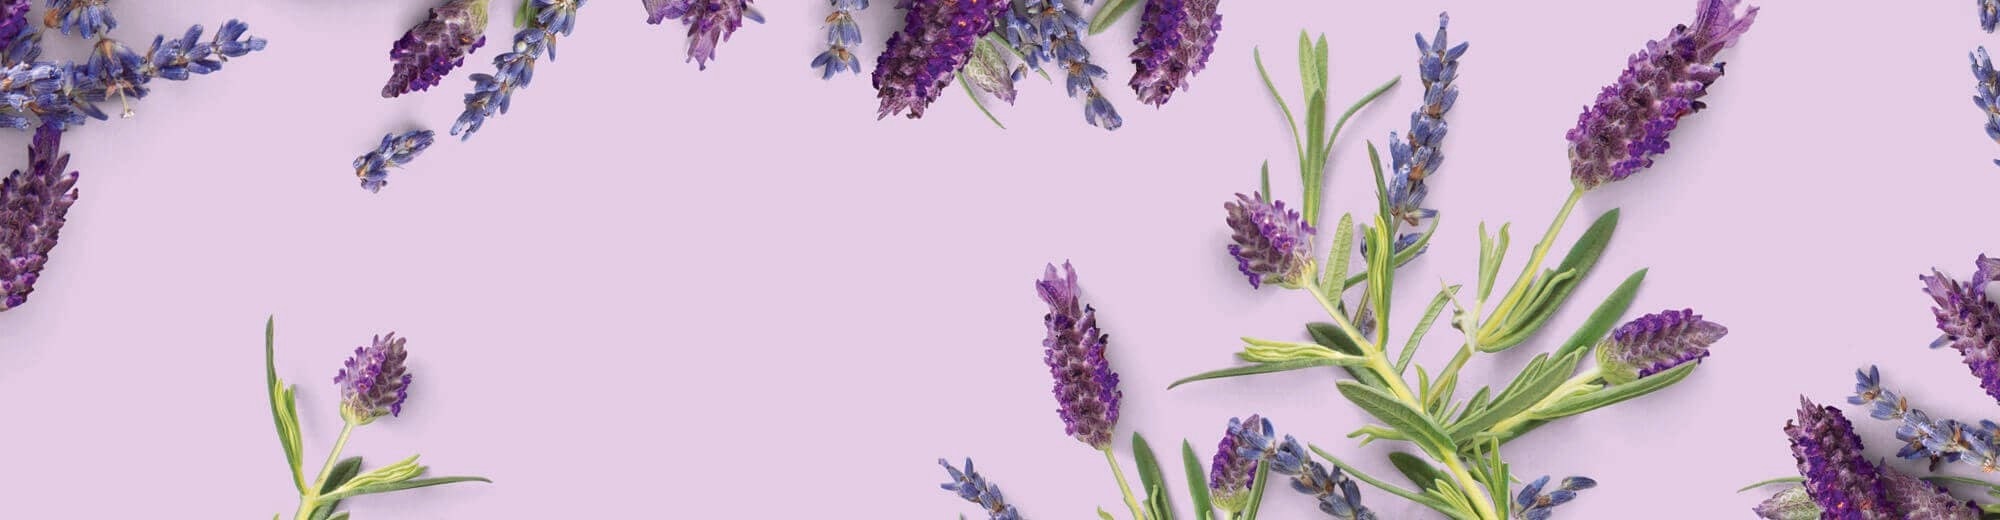 argan oil lavender